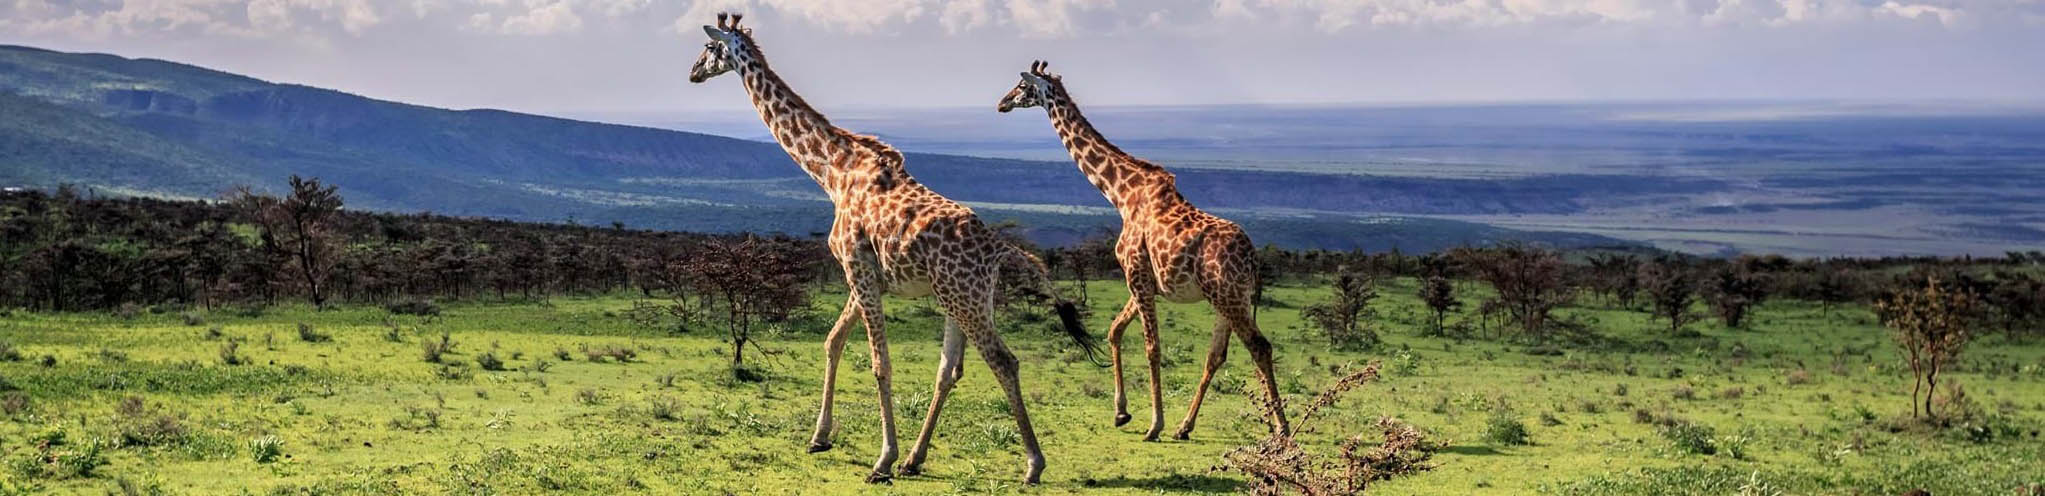 Katavi giraffes